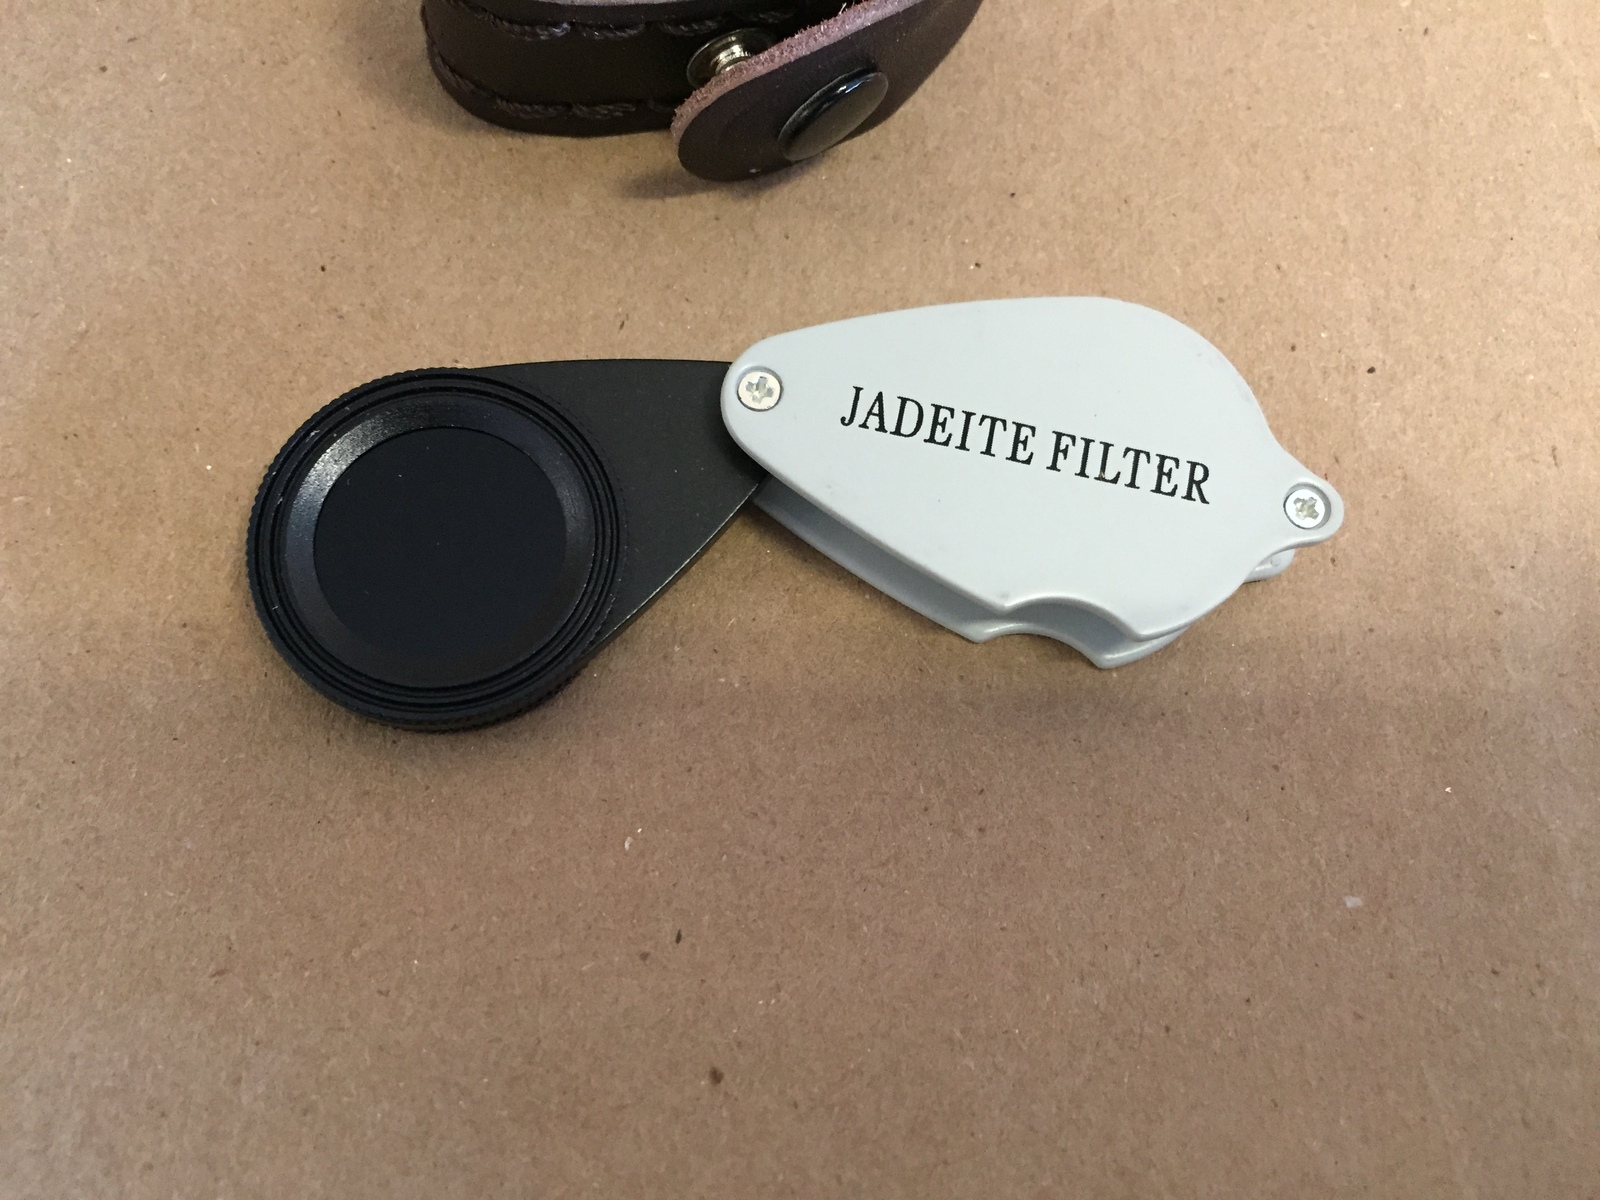 Chelsea (Jadeite) Filter 4 Gems / Gemstones, Loupe, Refractometer - USA STOCK - $21.99